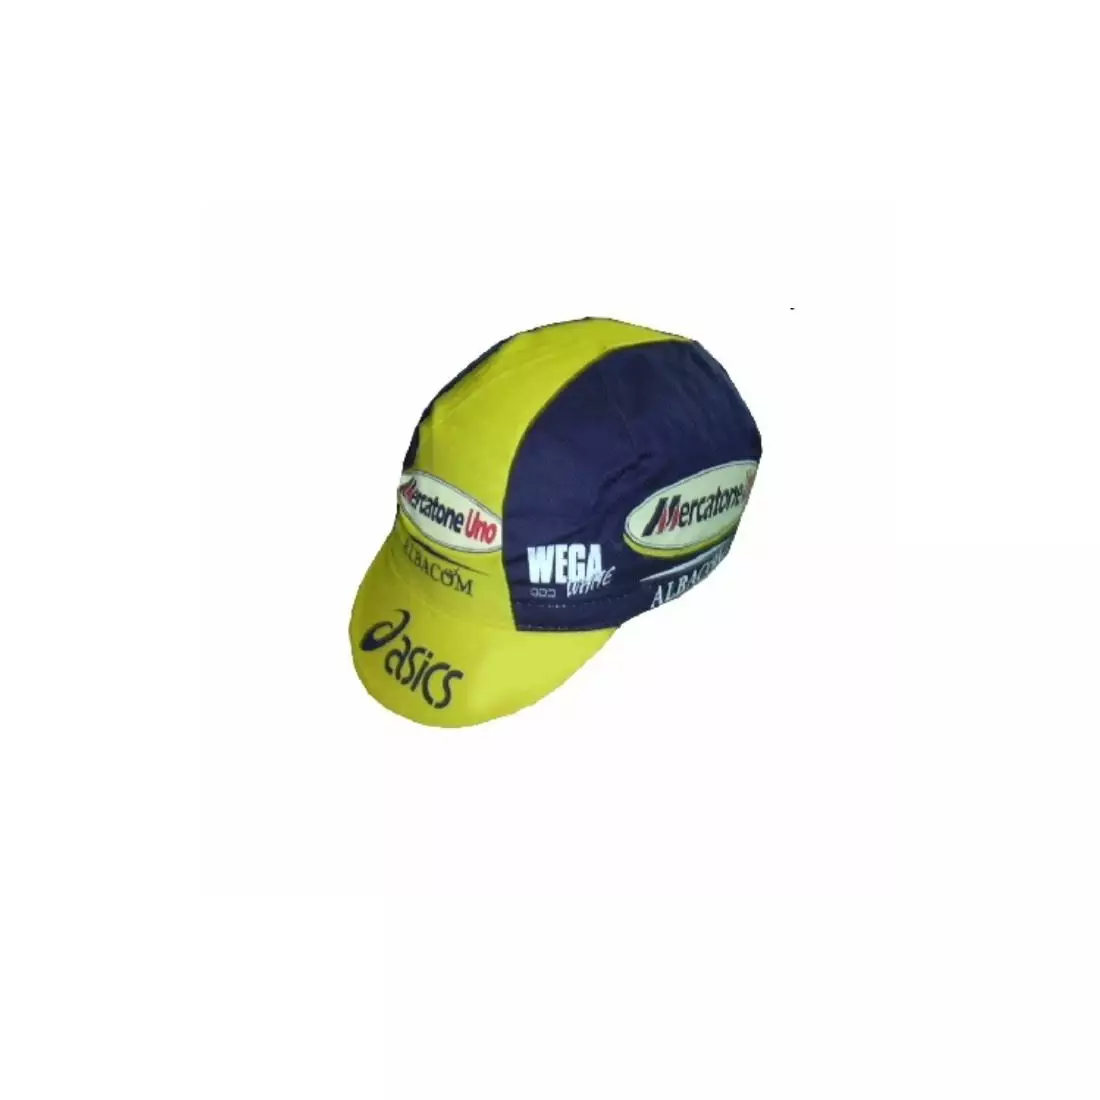 APIS PROFI MERCATONE UNO ASICS cycling cap with visor